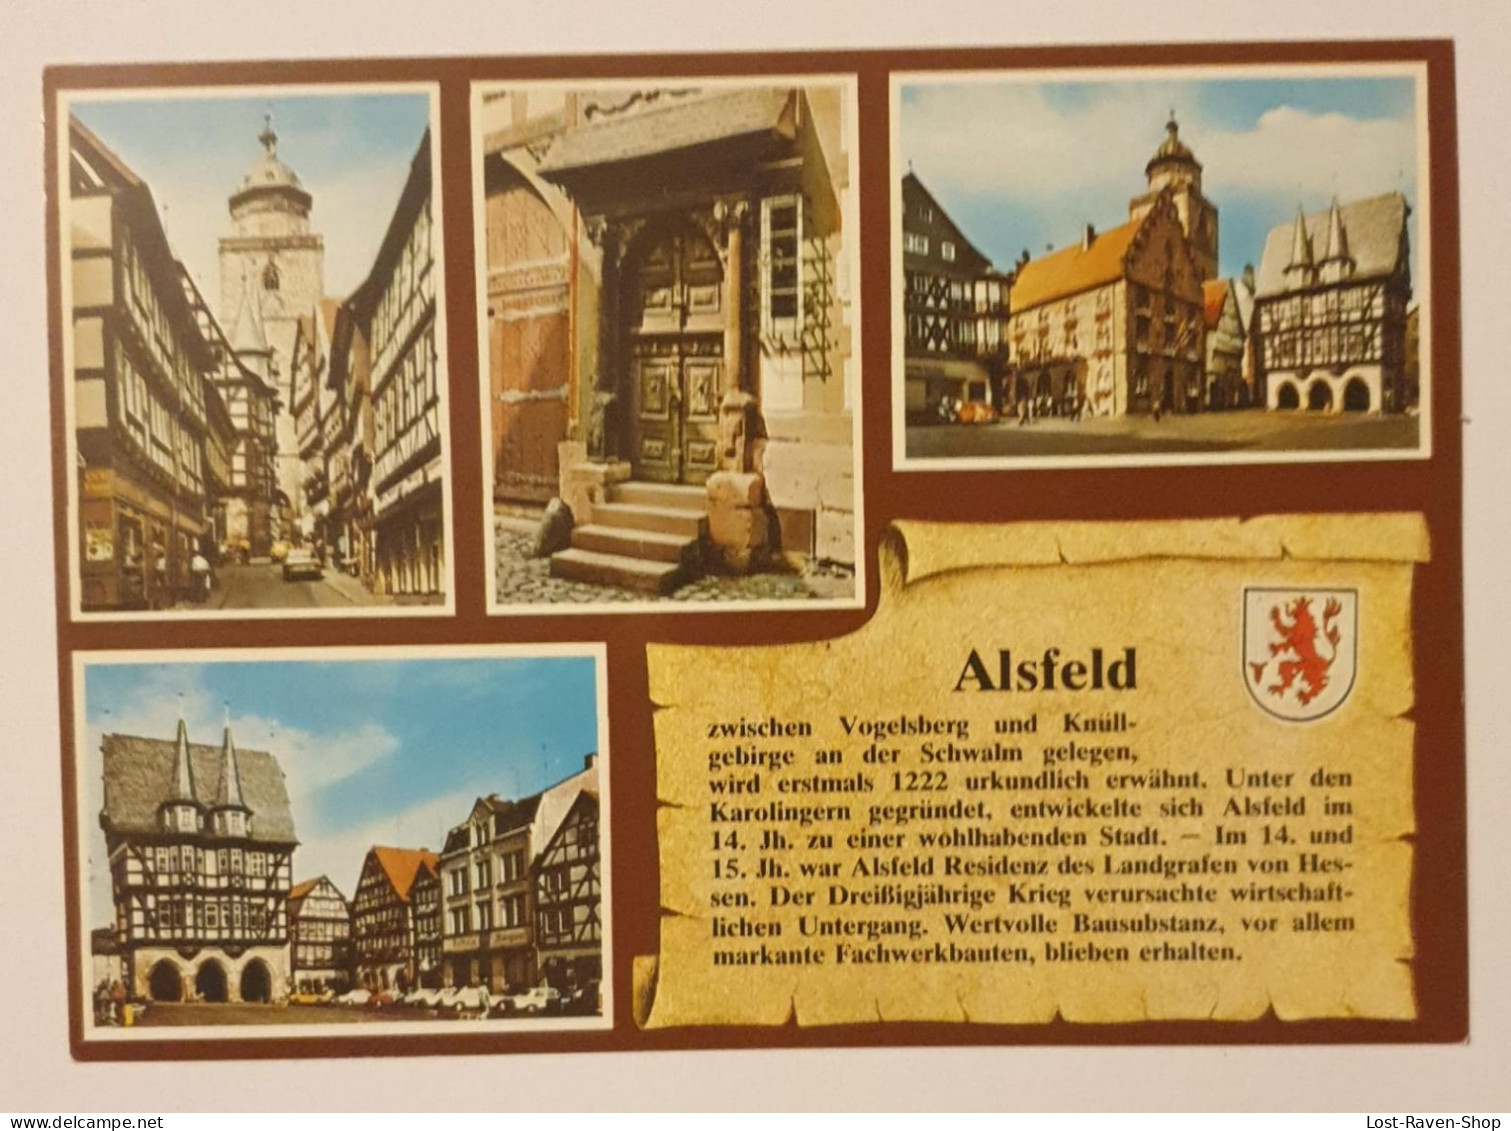 Alsfeld - Alsfeld